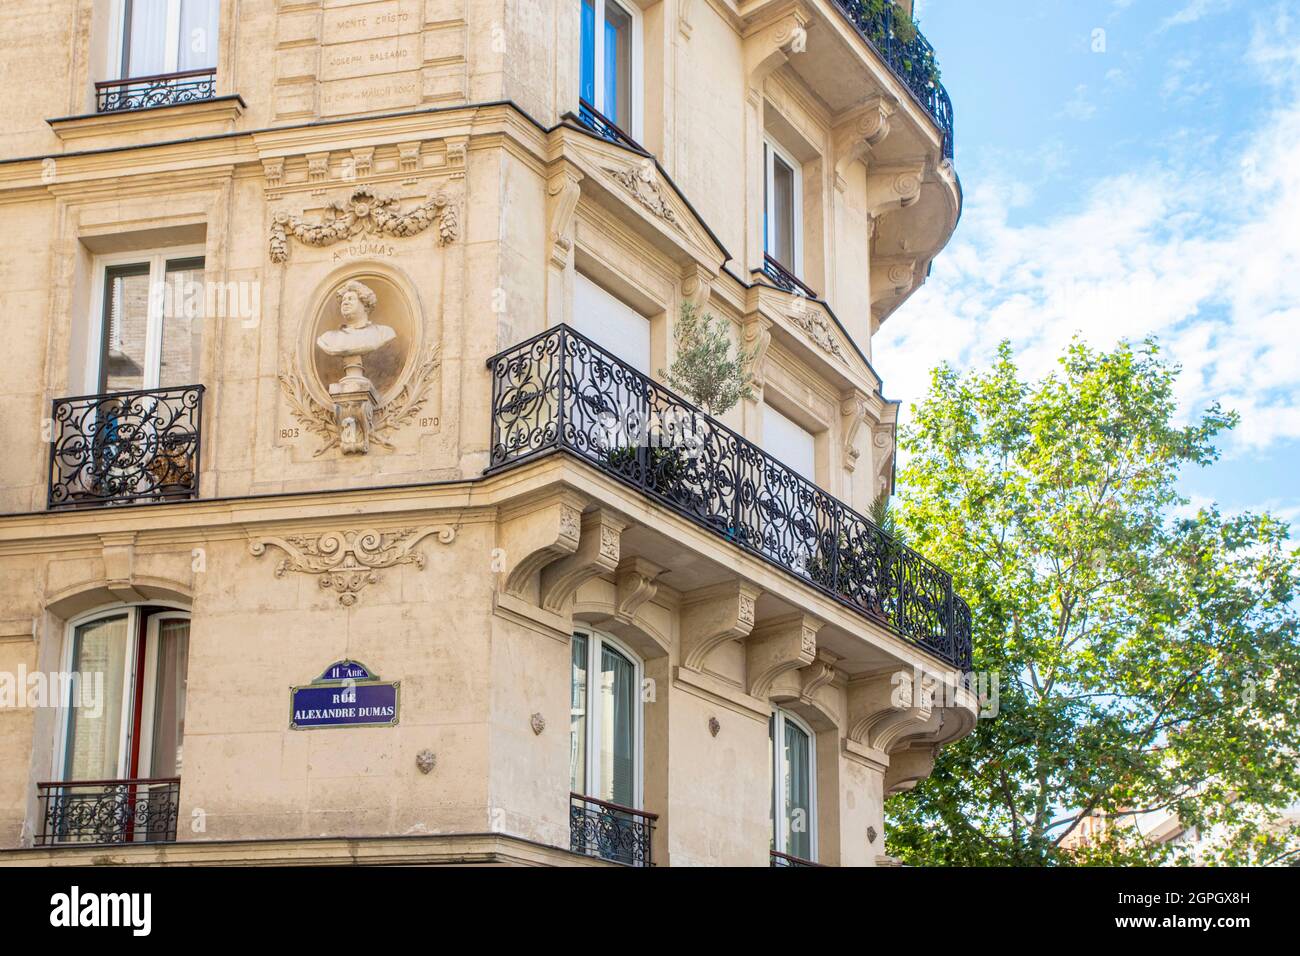 France, Paris, Alexandre Dumas street, bust of the writer Alexandre Dumas in the façade Stock Photo